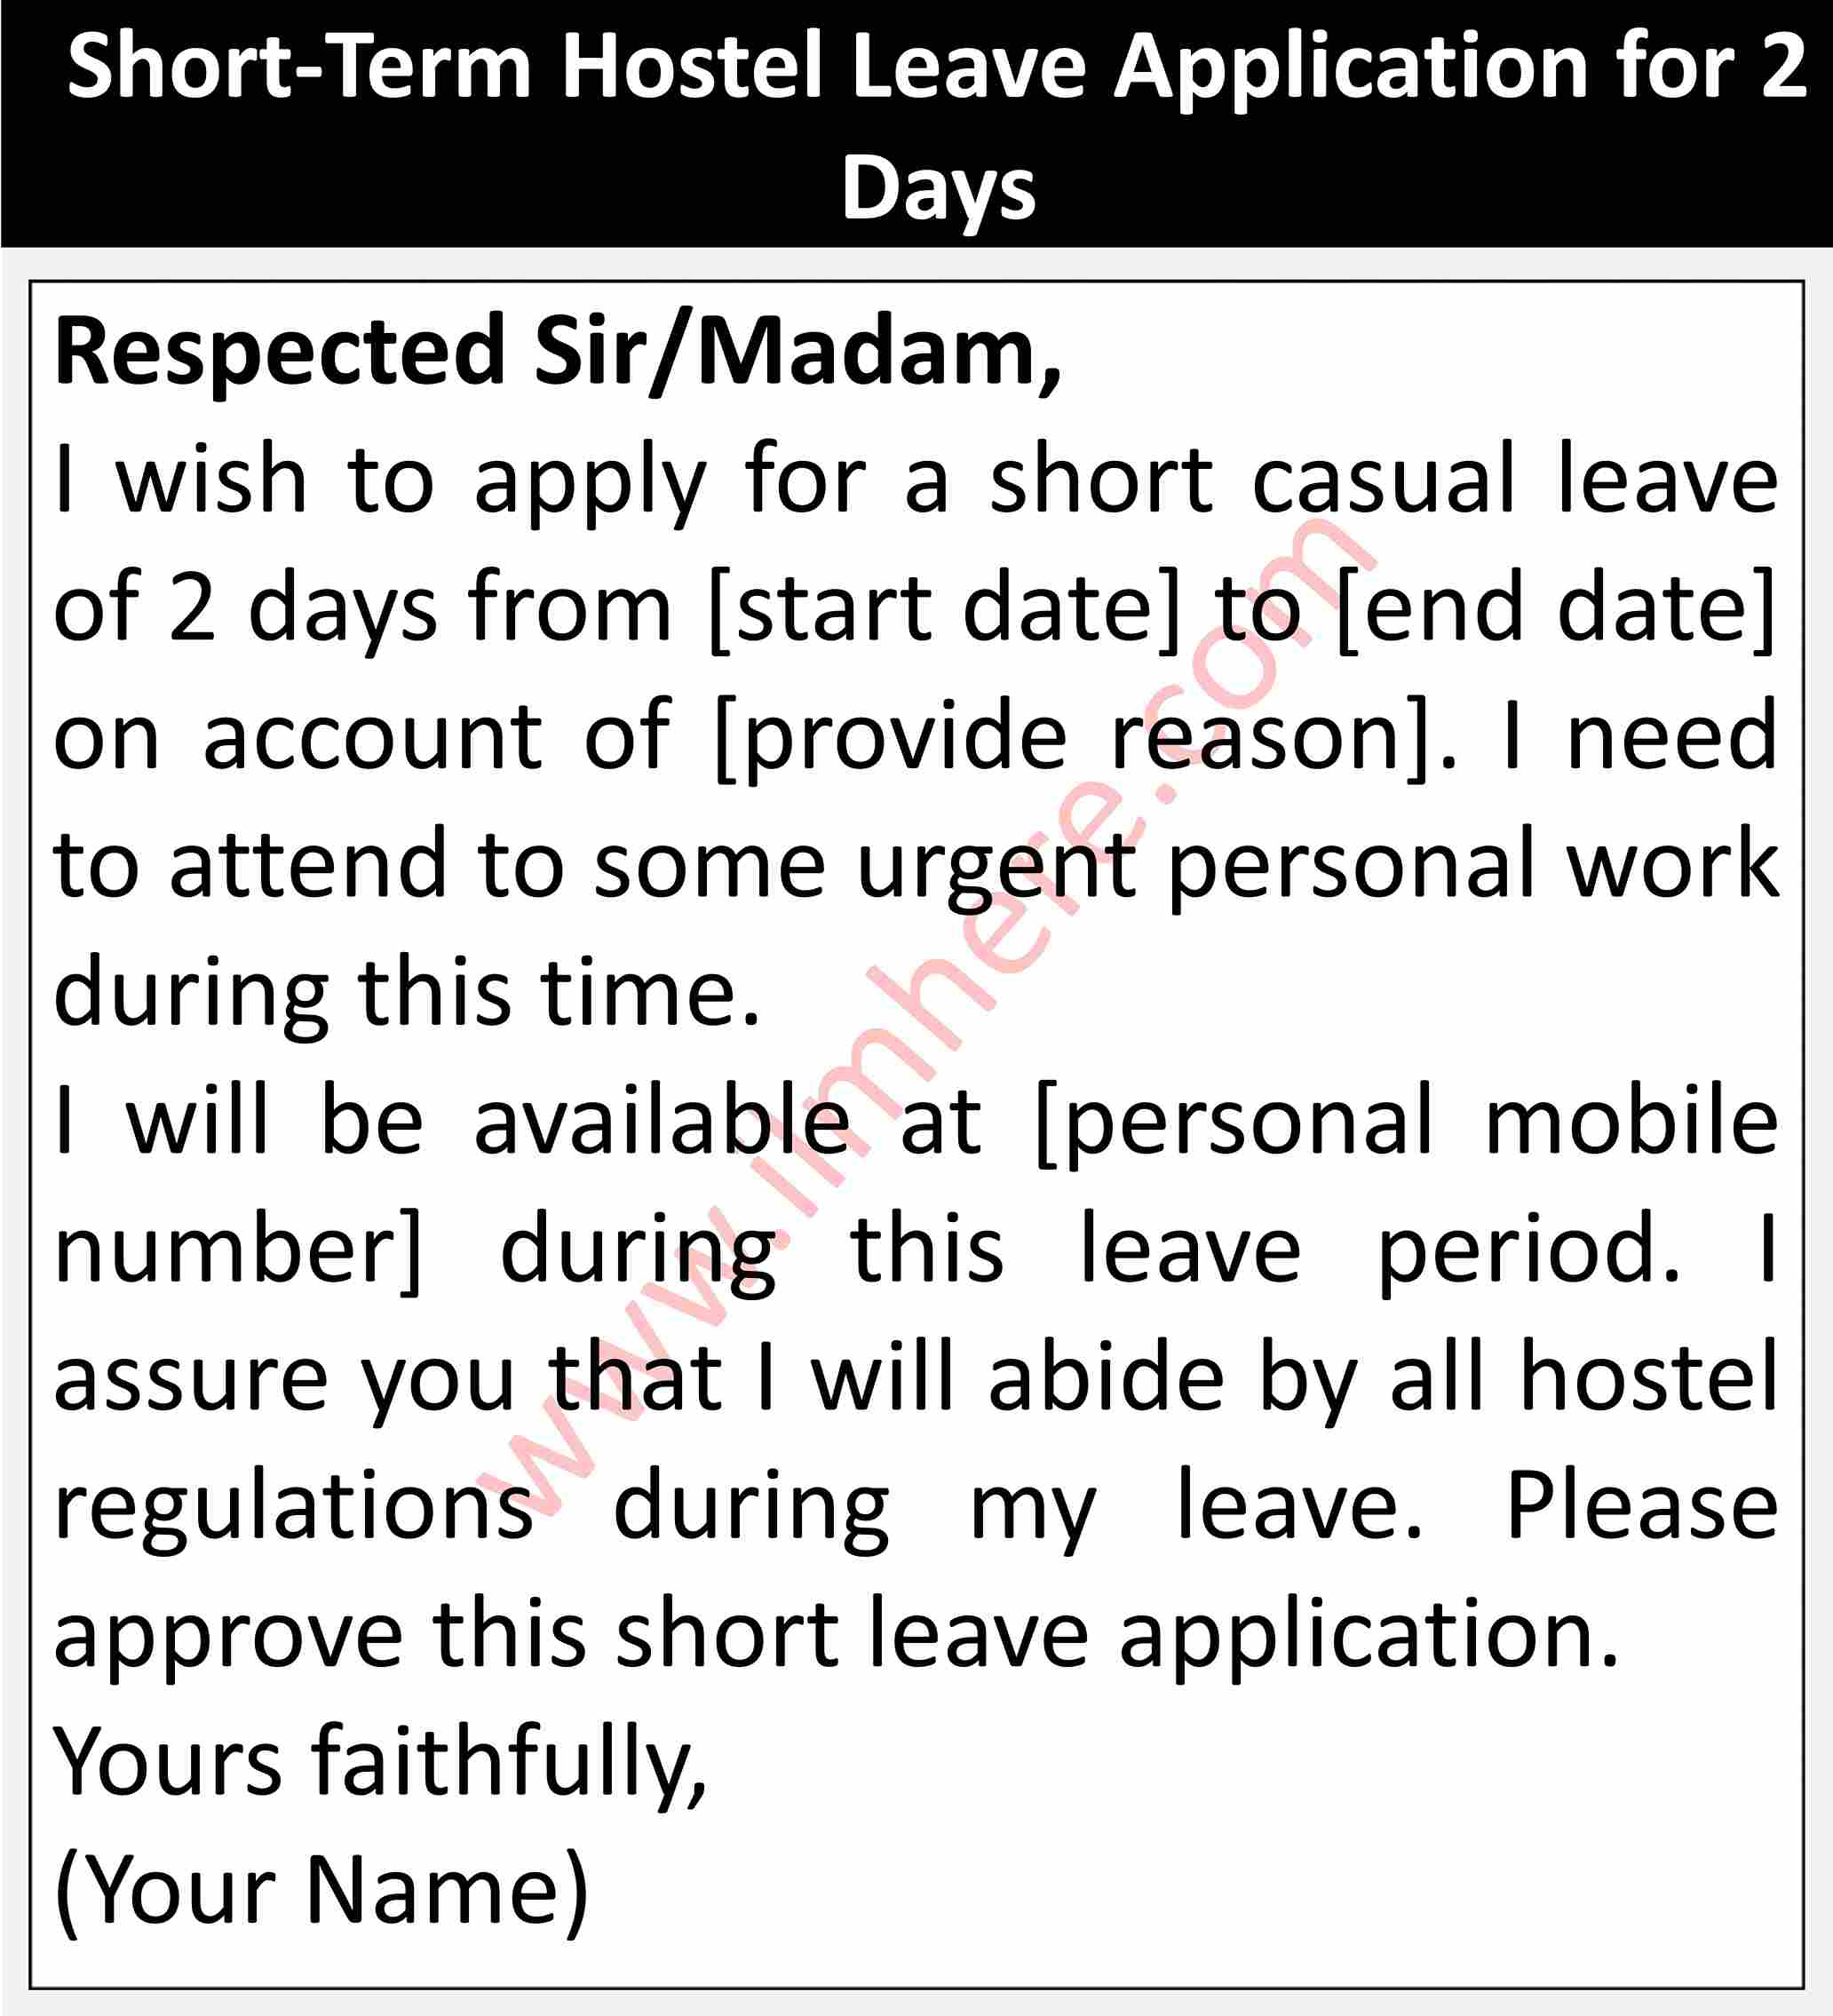 Short-Term Hostel Leave Application for 2 Days